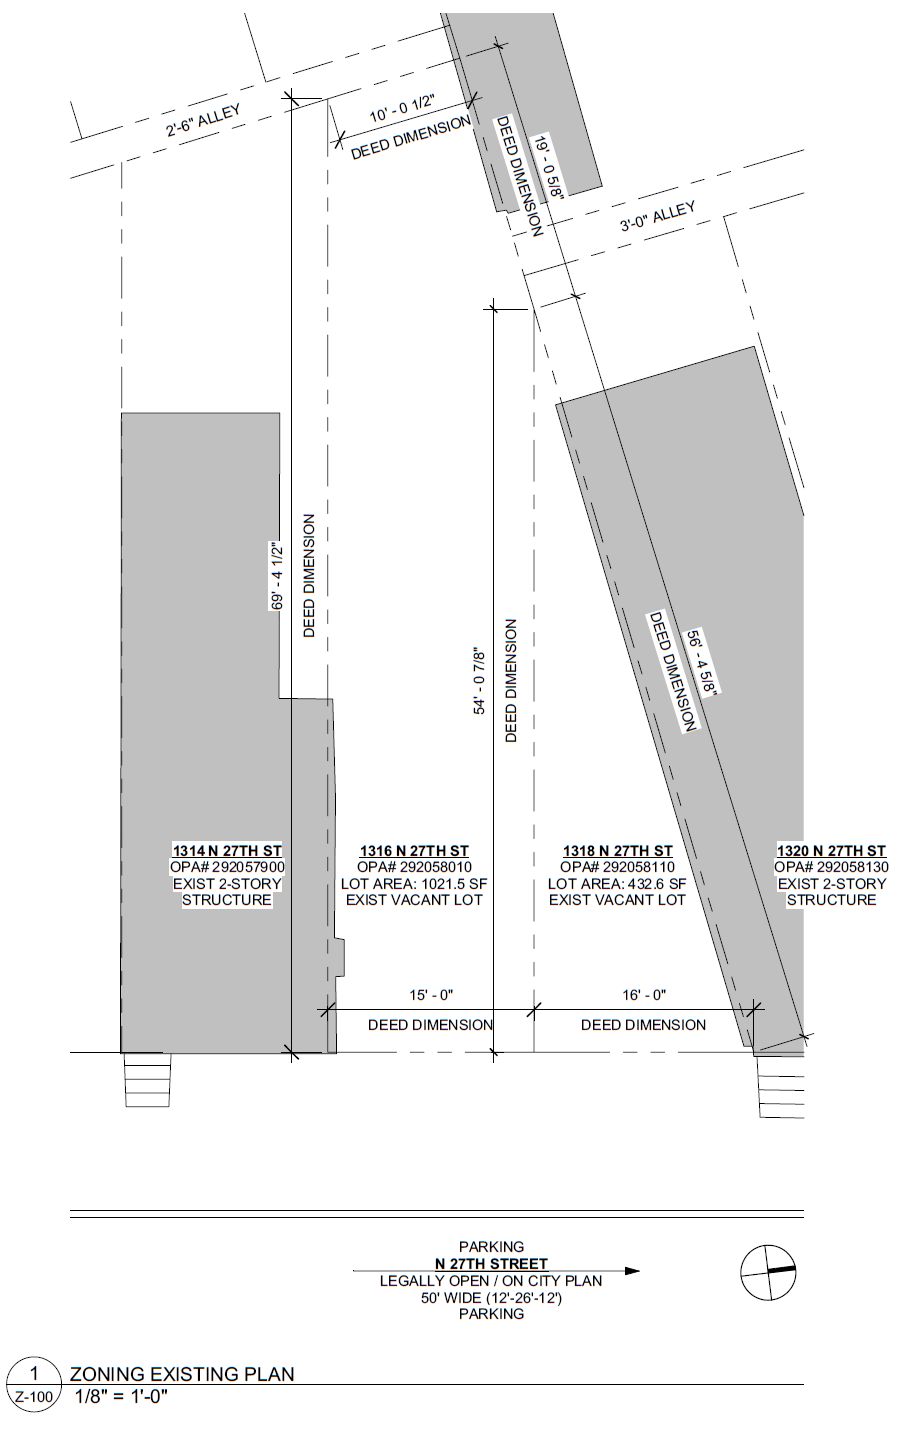 1316 North 27th Street. Site plan. Credit: Moto Designshop via the City of Philadelphia